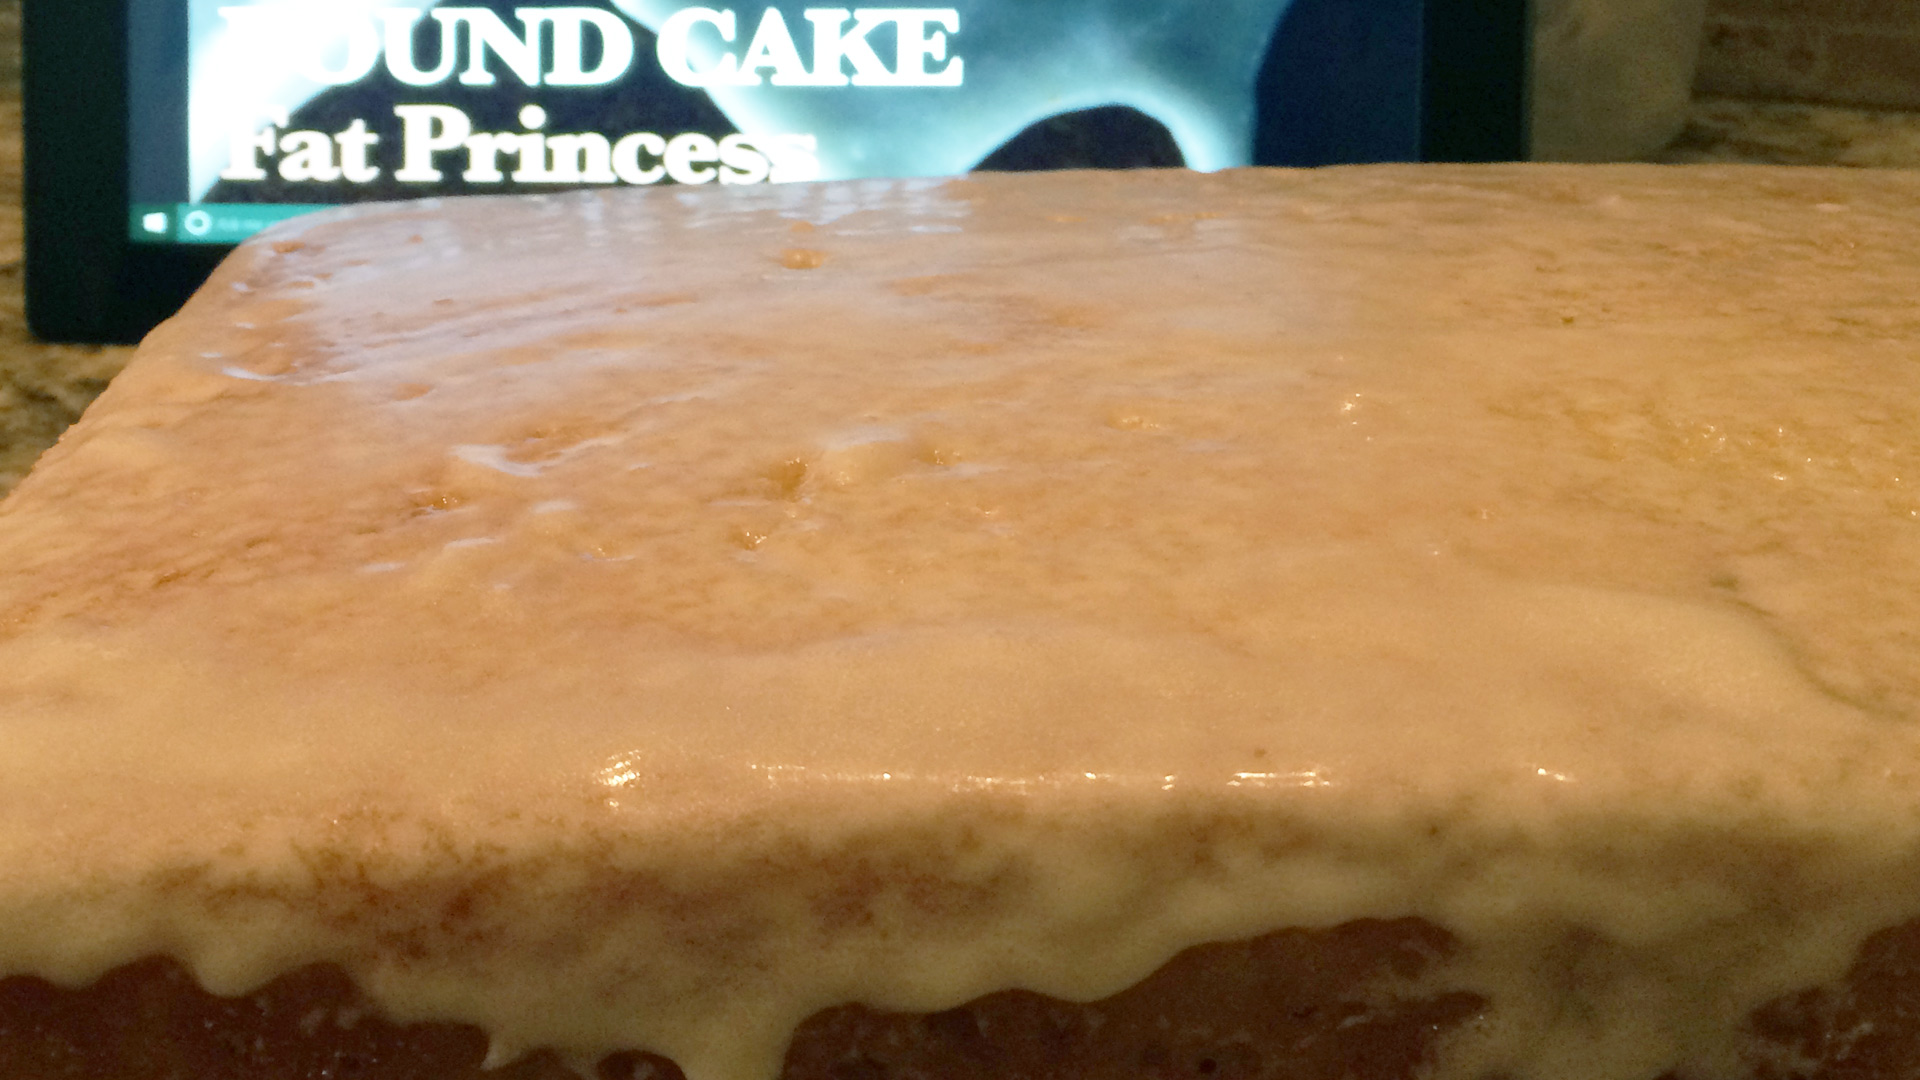 Pound Cake from Fat Princess